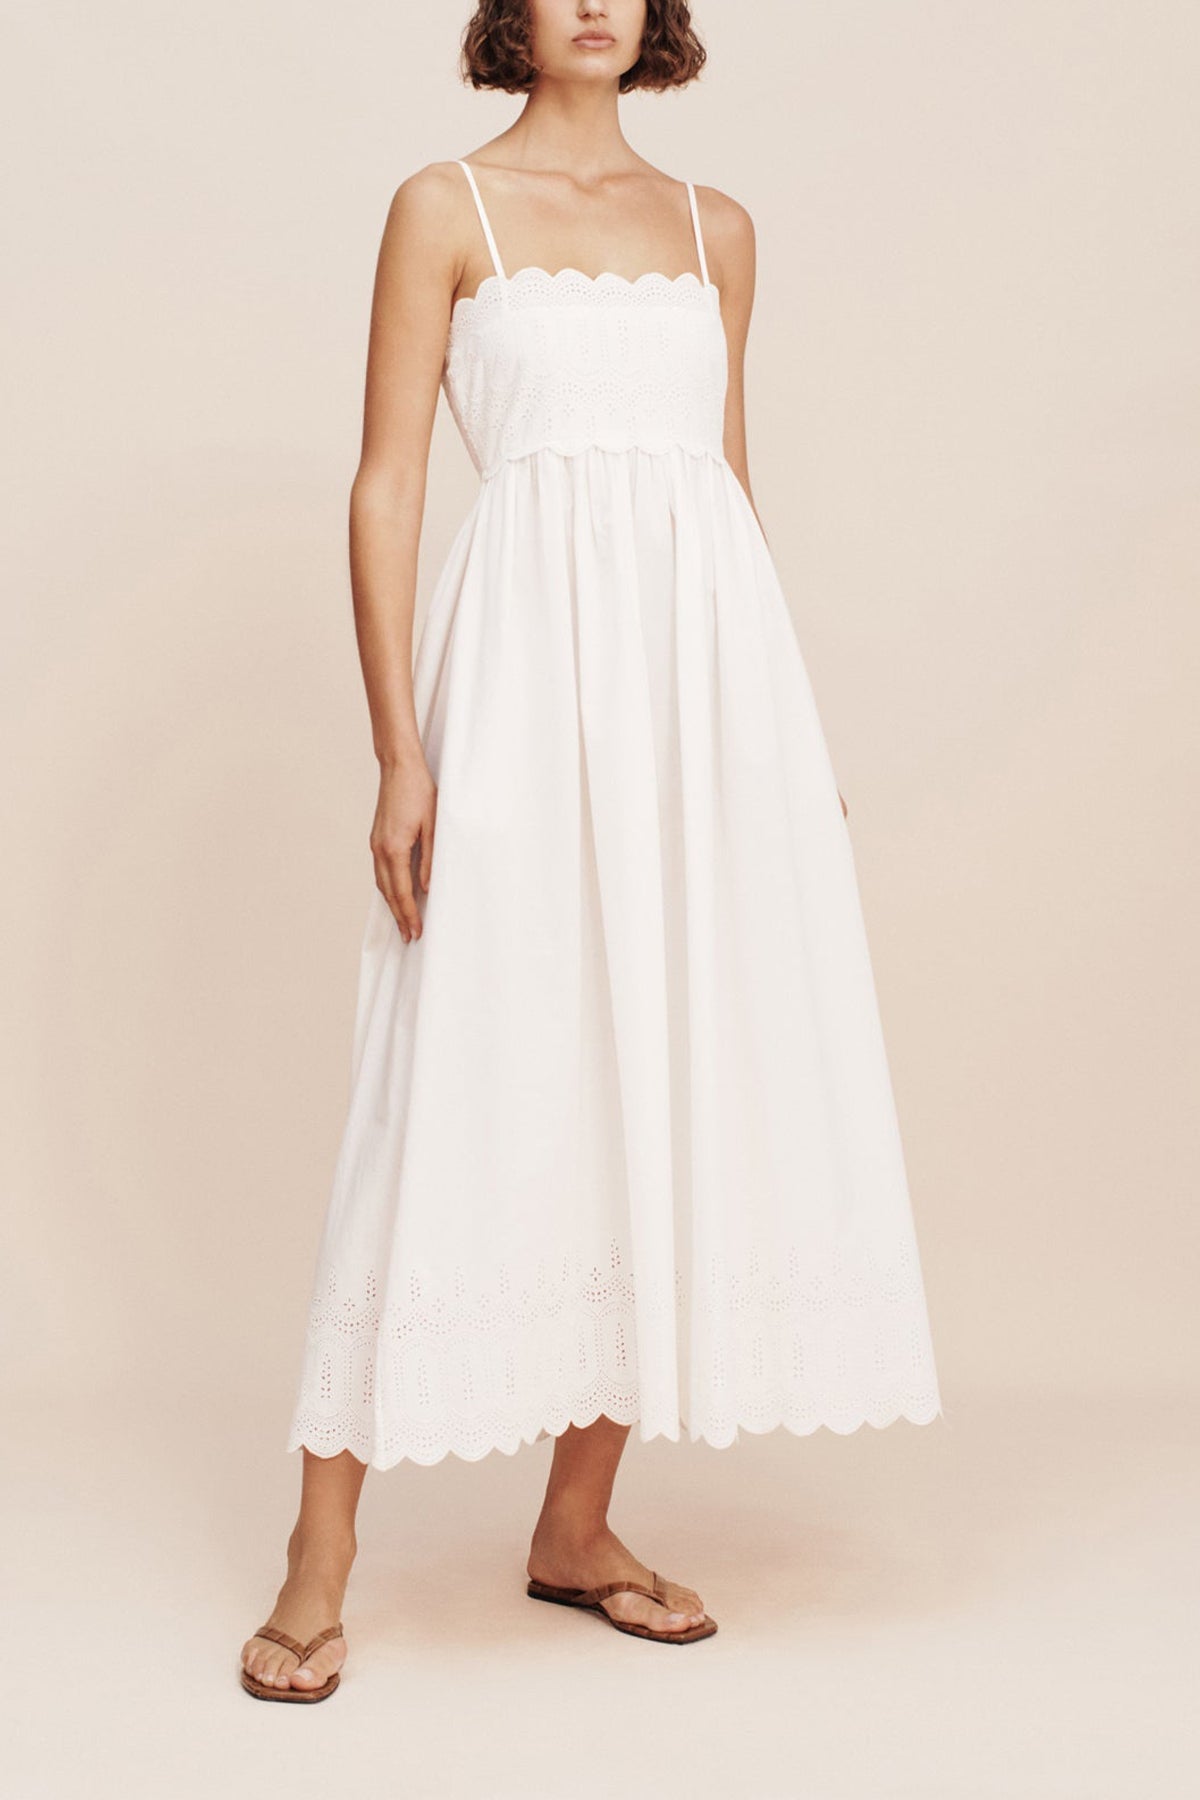 Maisie Dress in Vintage White - shop-olivia.com